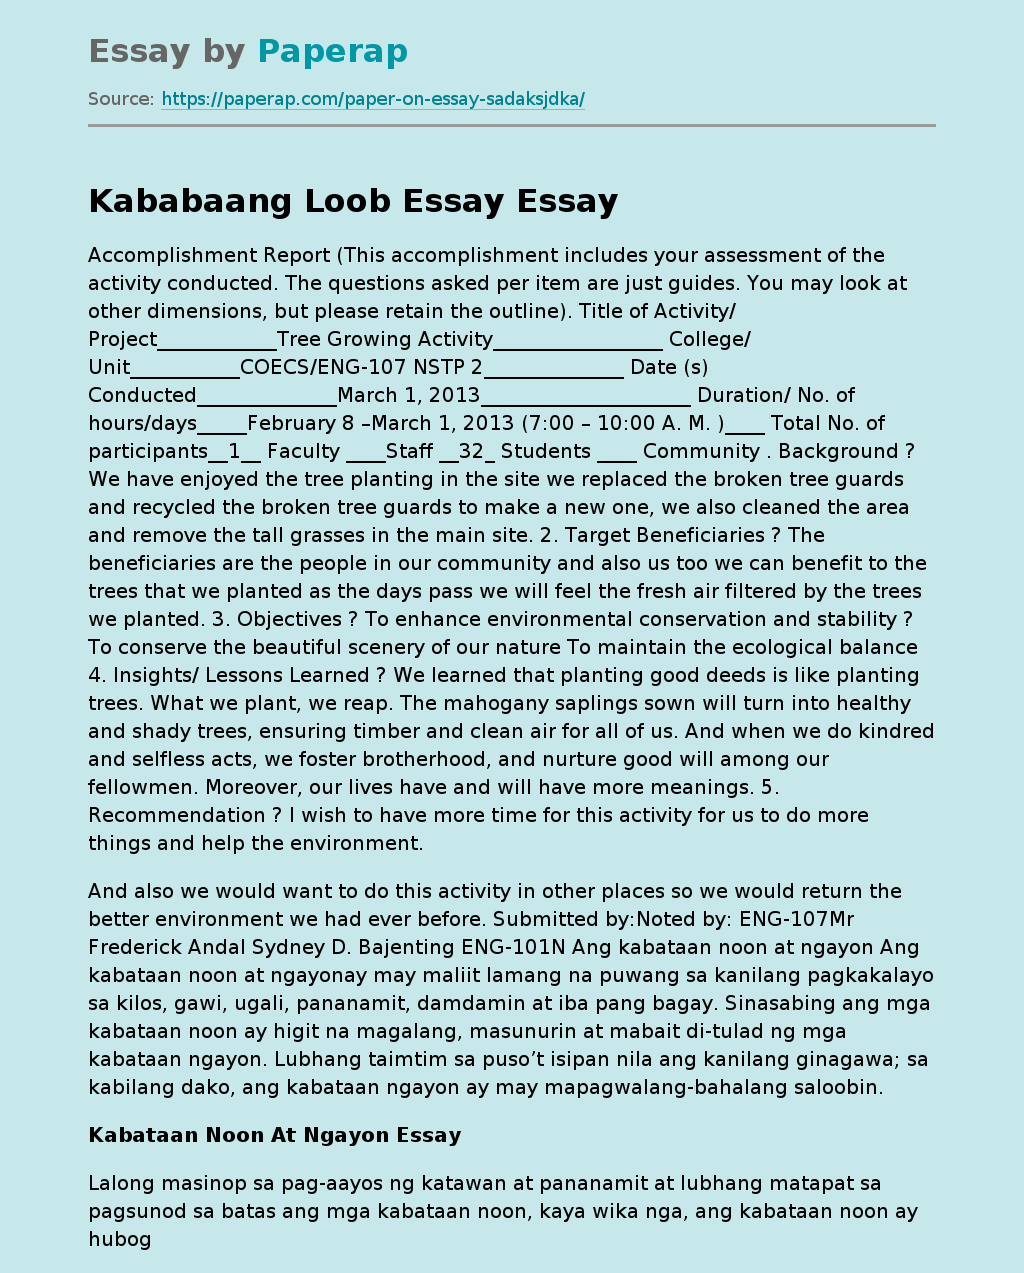 Kababaang Loob Essay